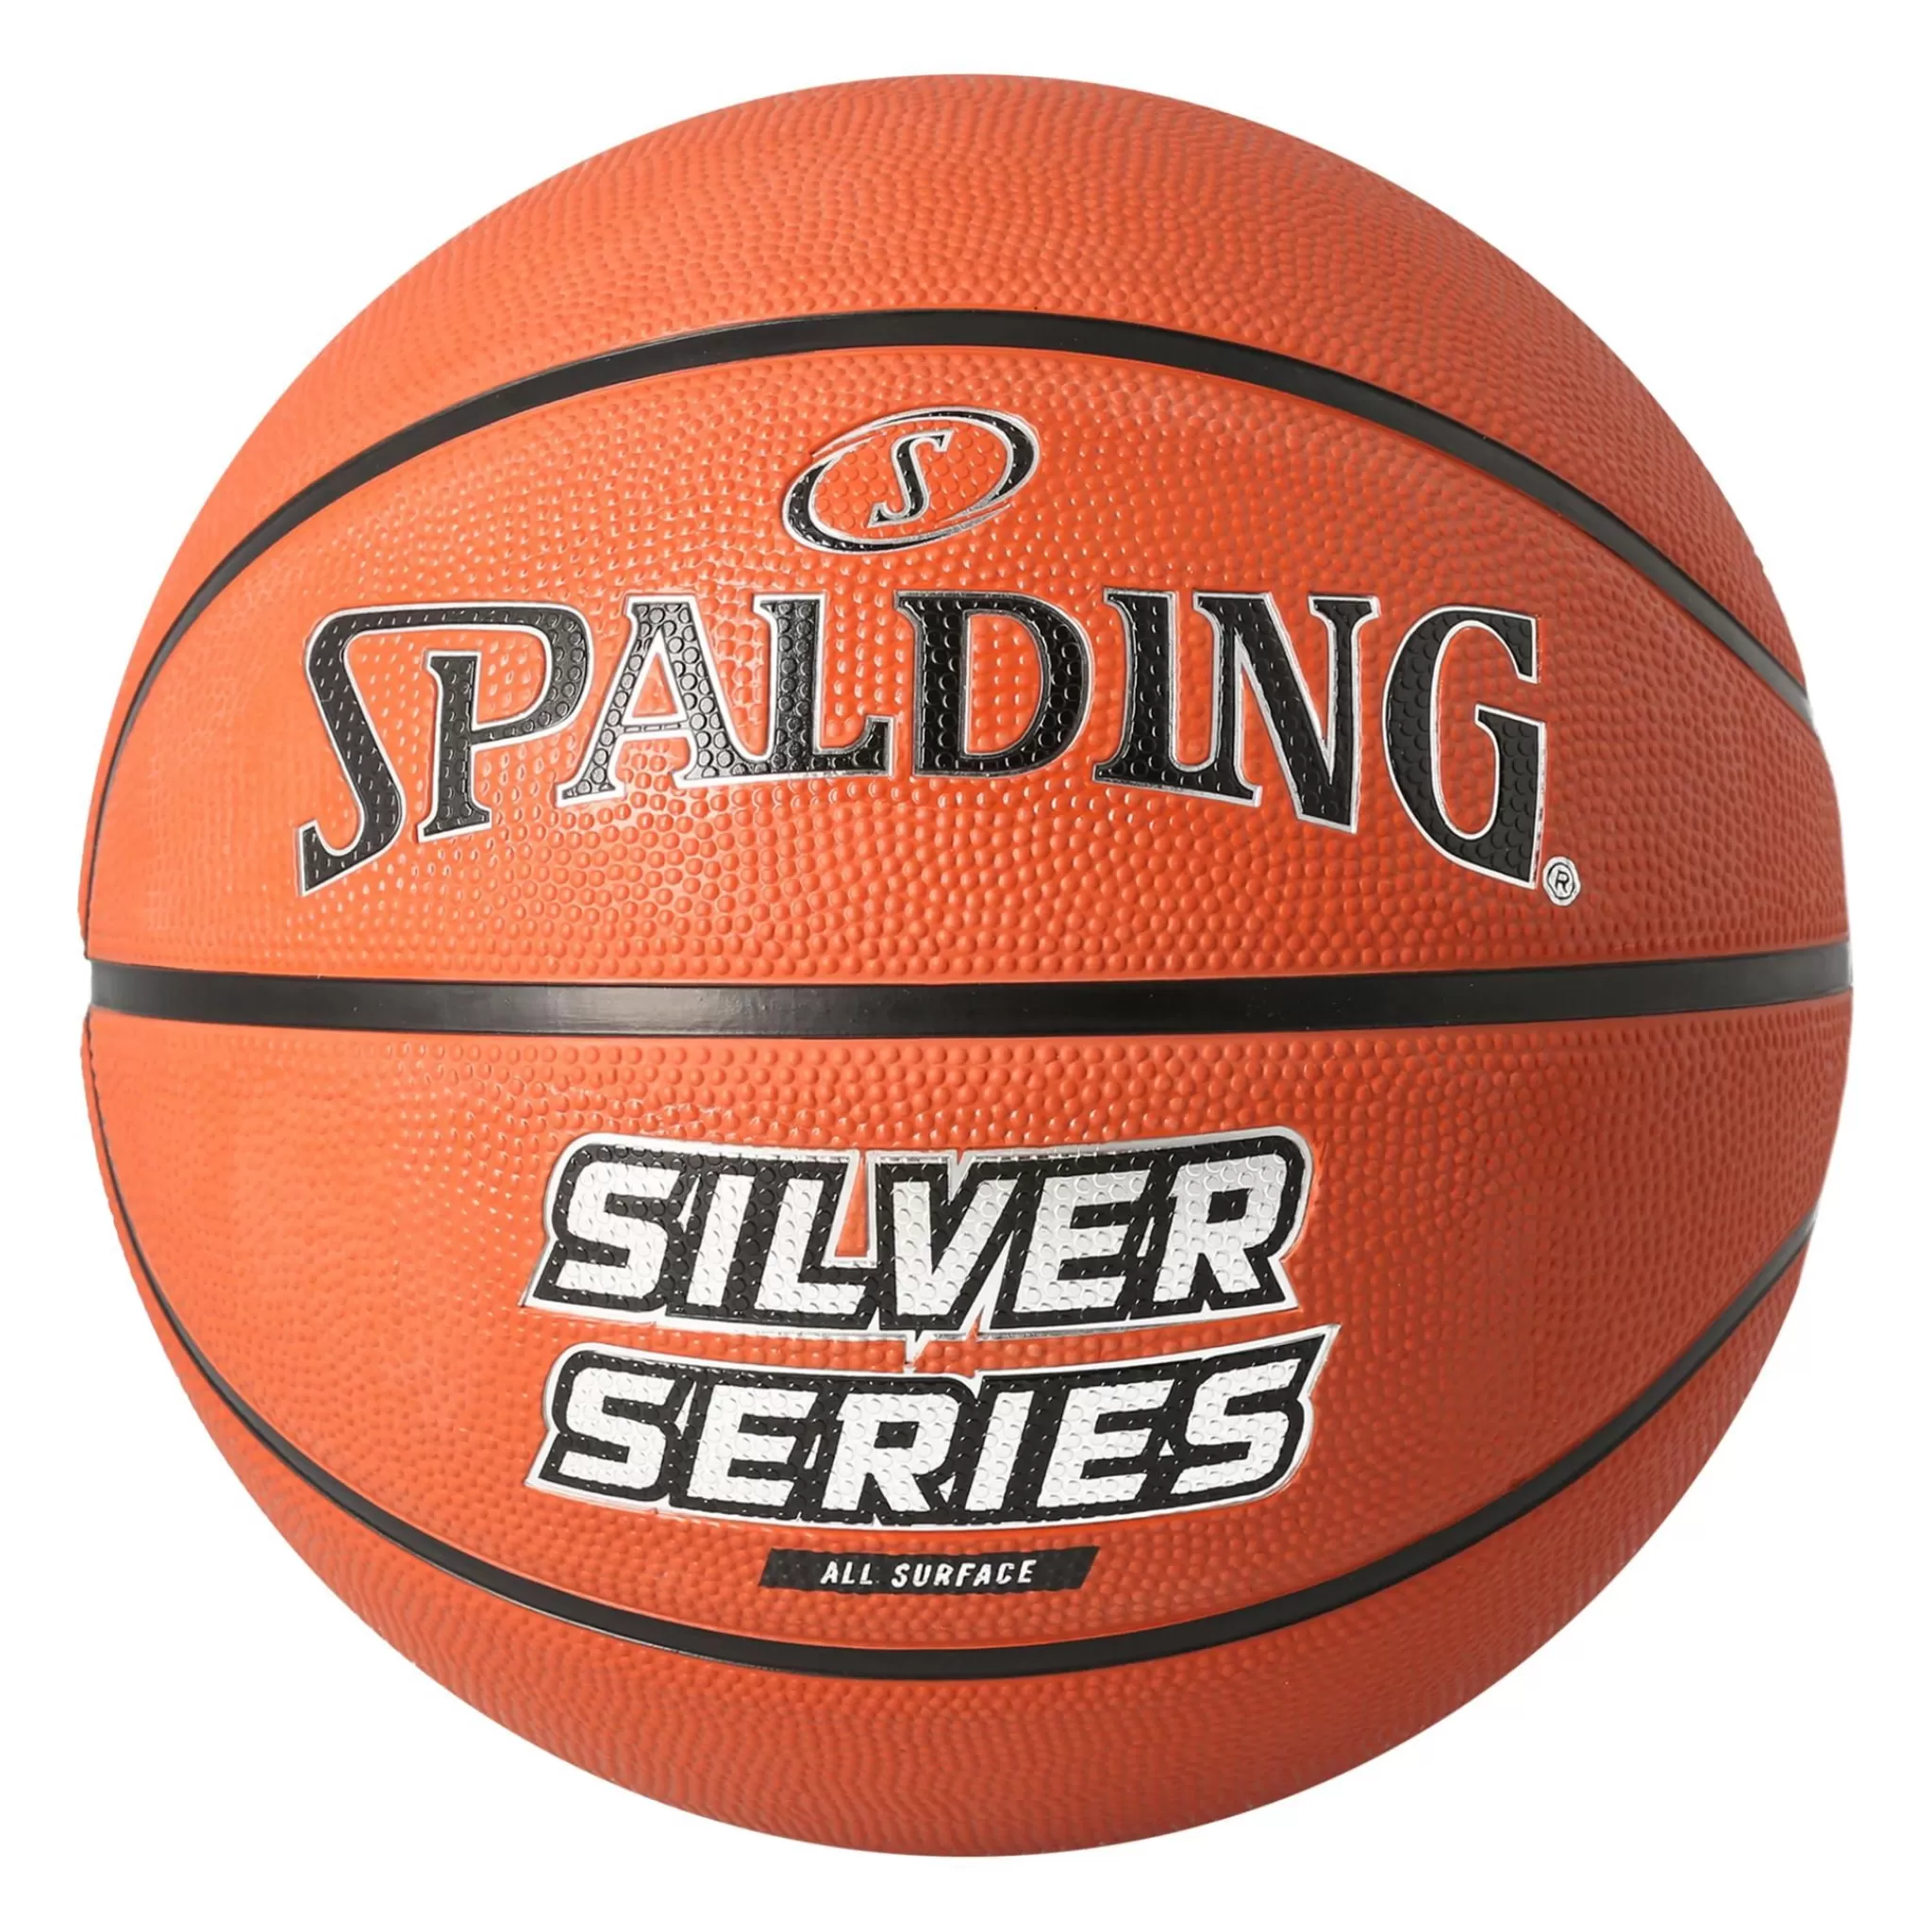 Hot spalding Silver Series Rubber Basketball, Basketball